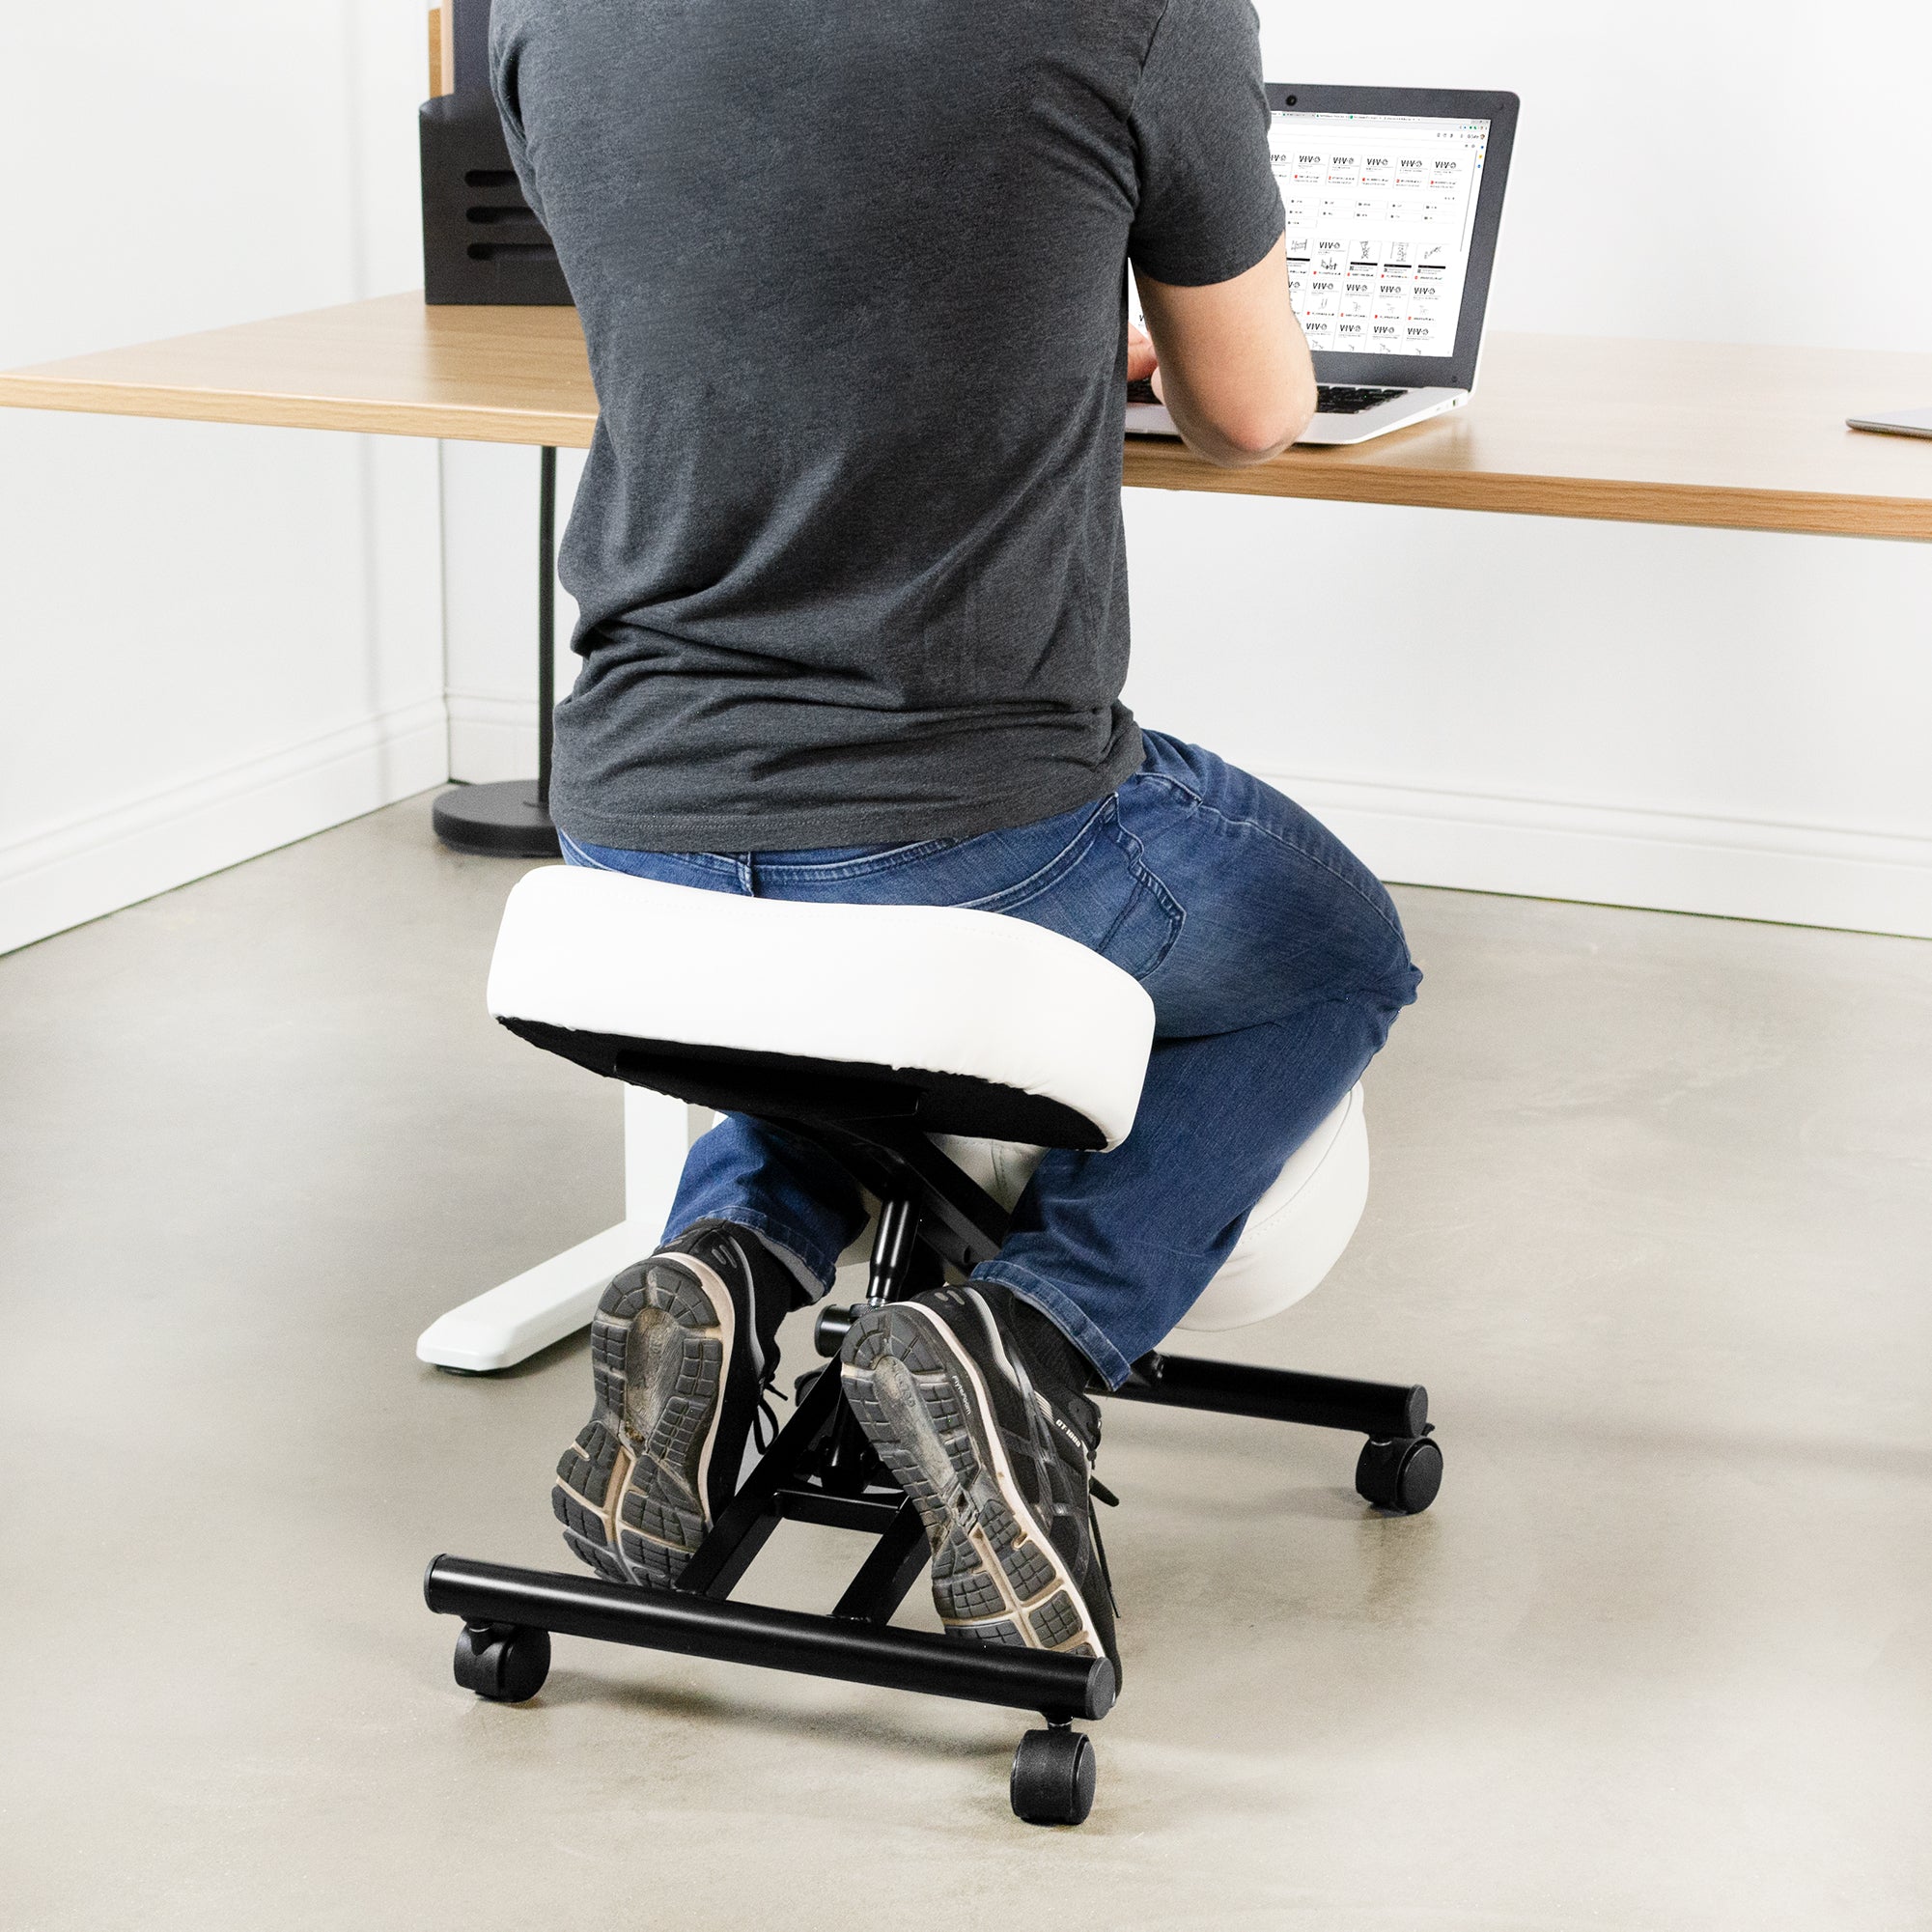 White Adjustable Ergonomic Kneeling Chair